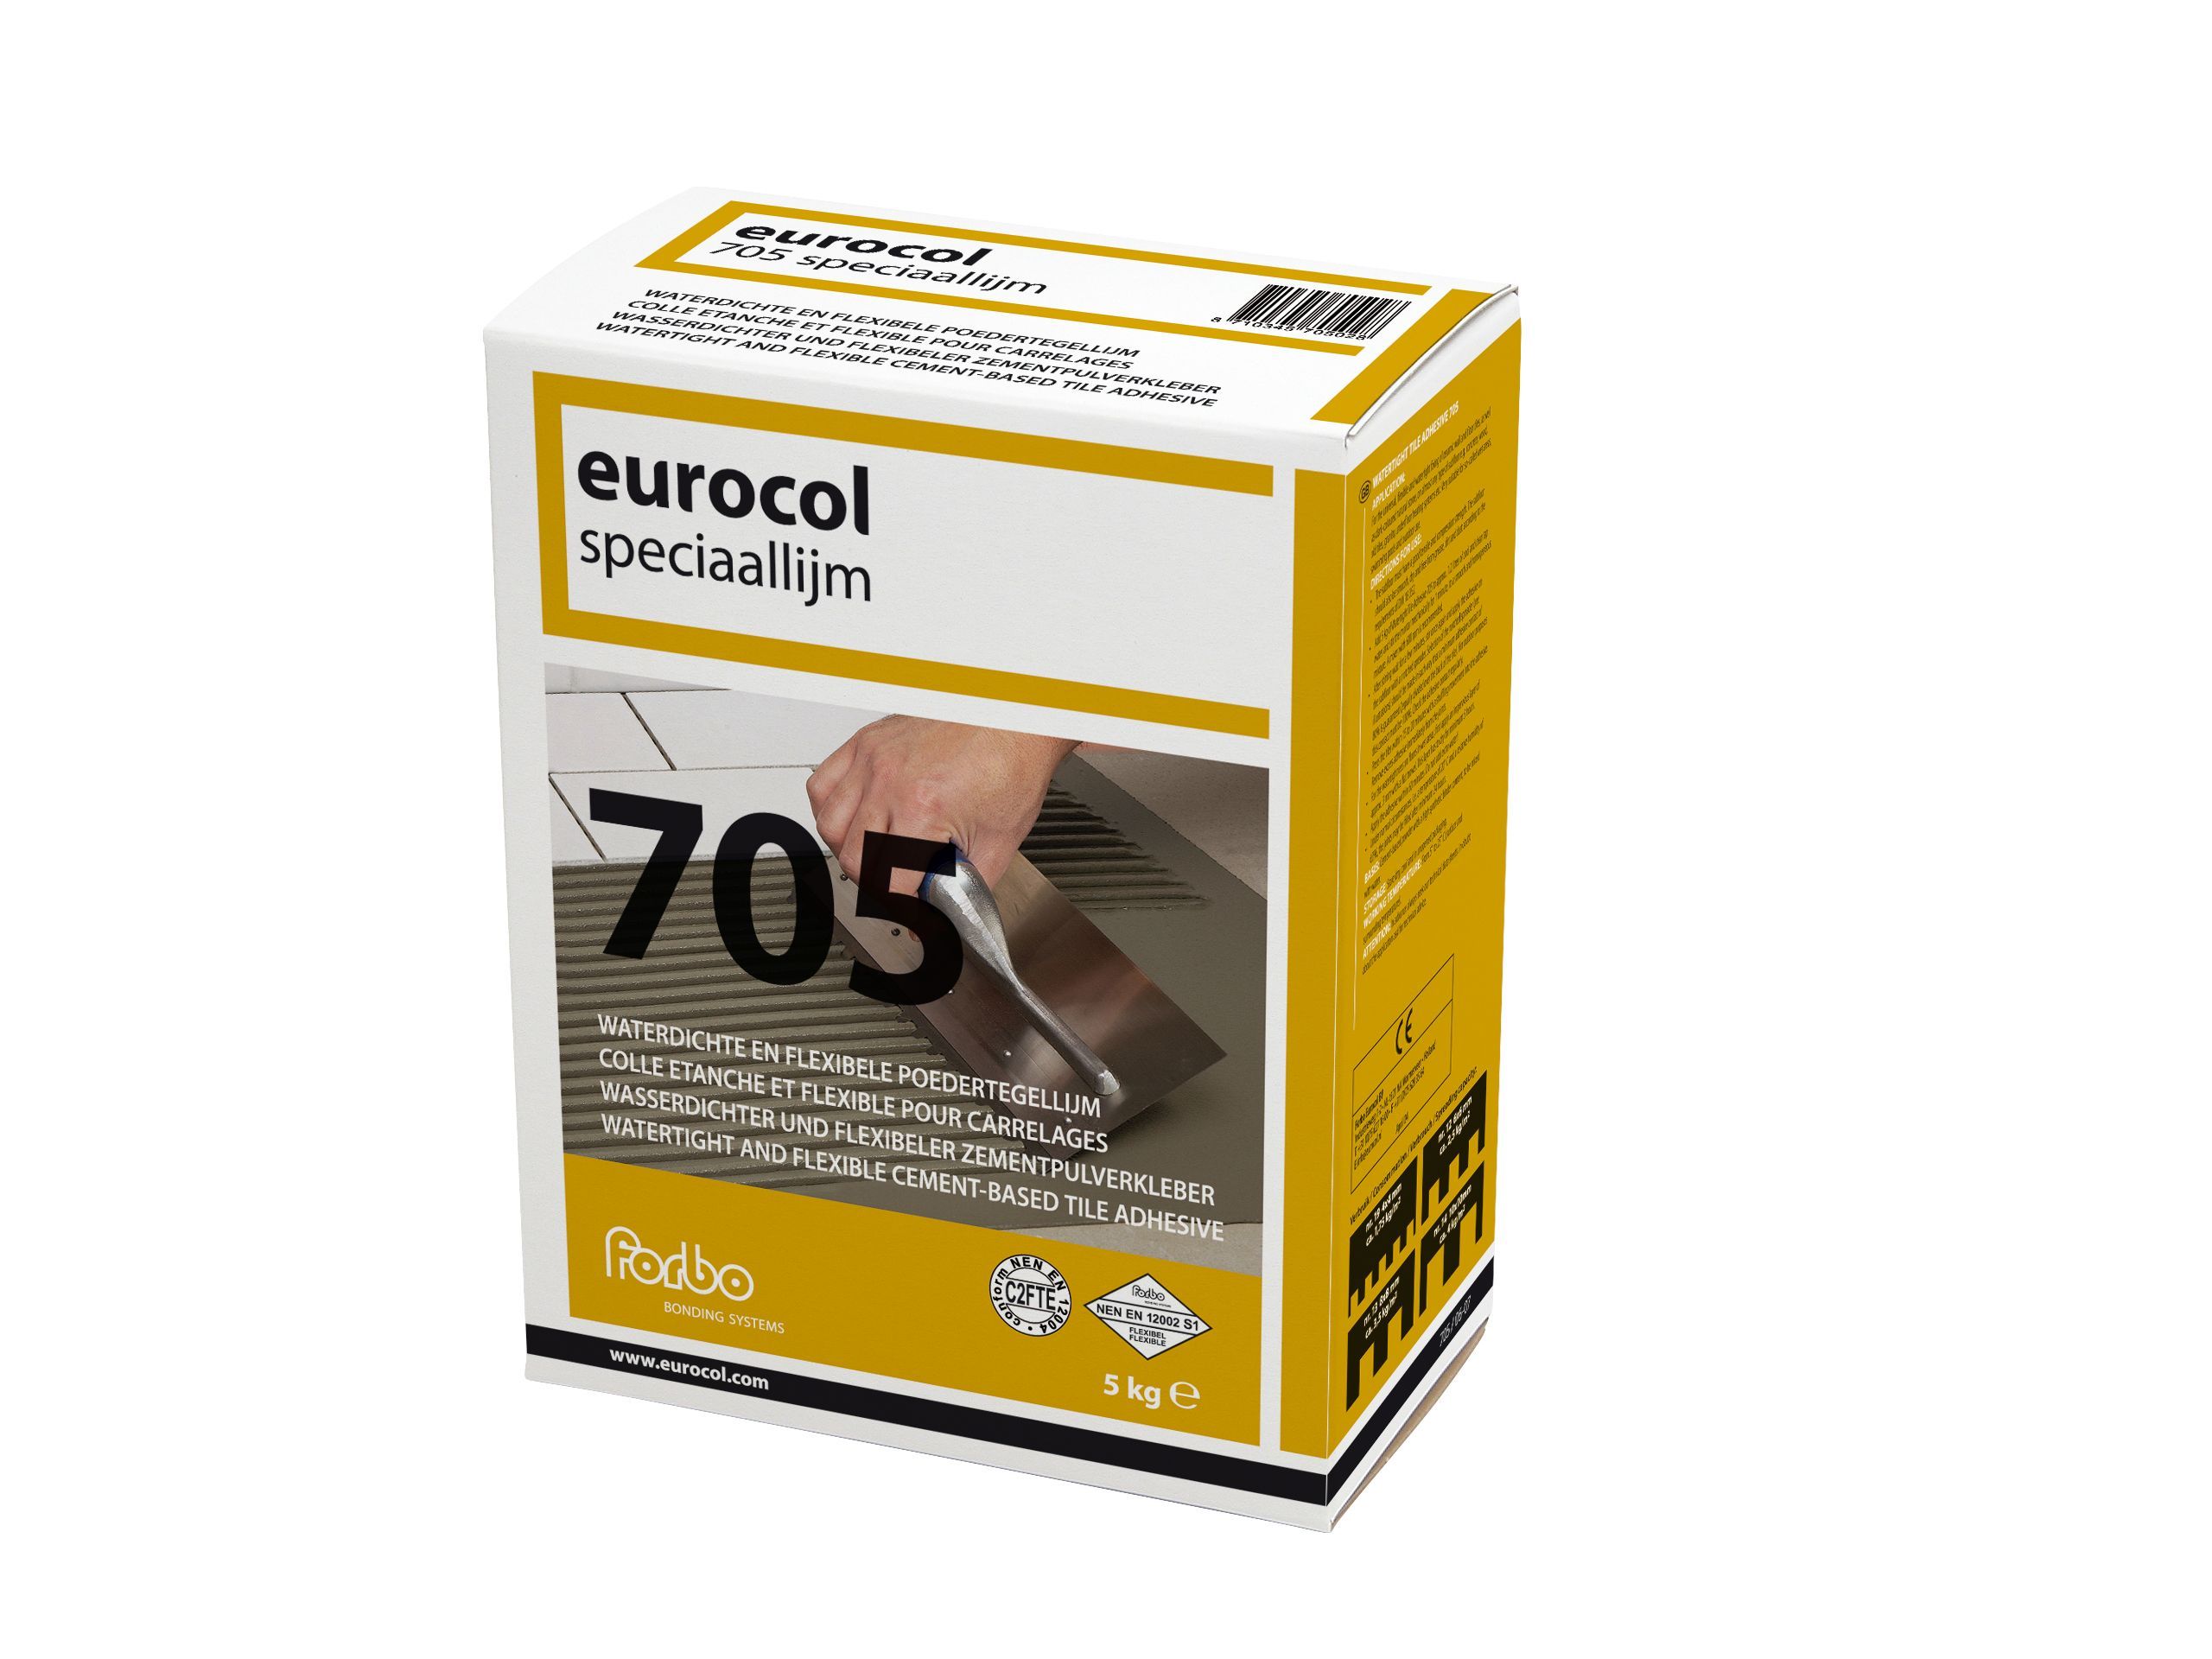 Eurocol 705 Speciaallijm pak 5 kg